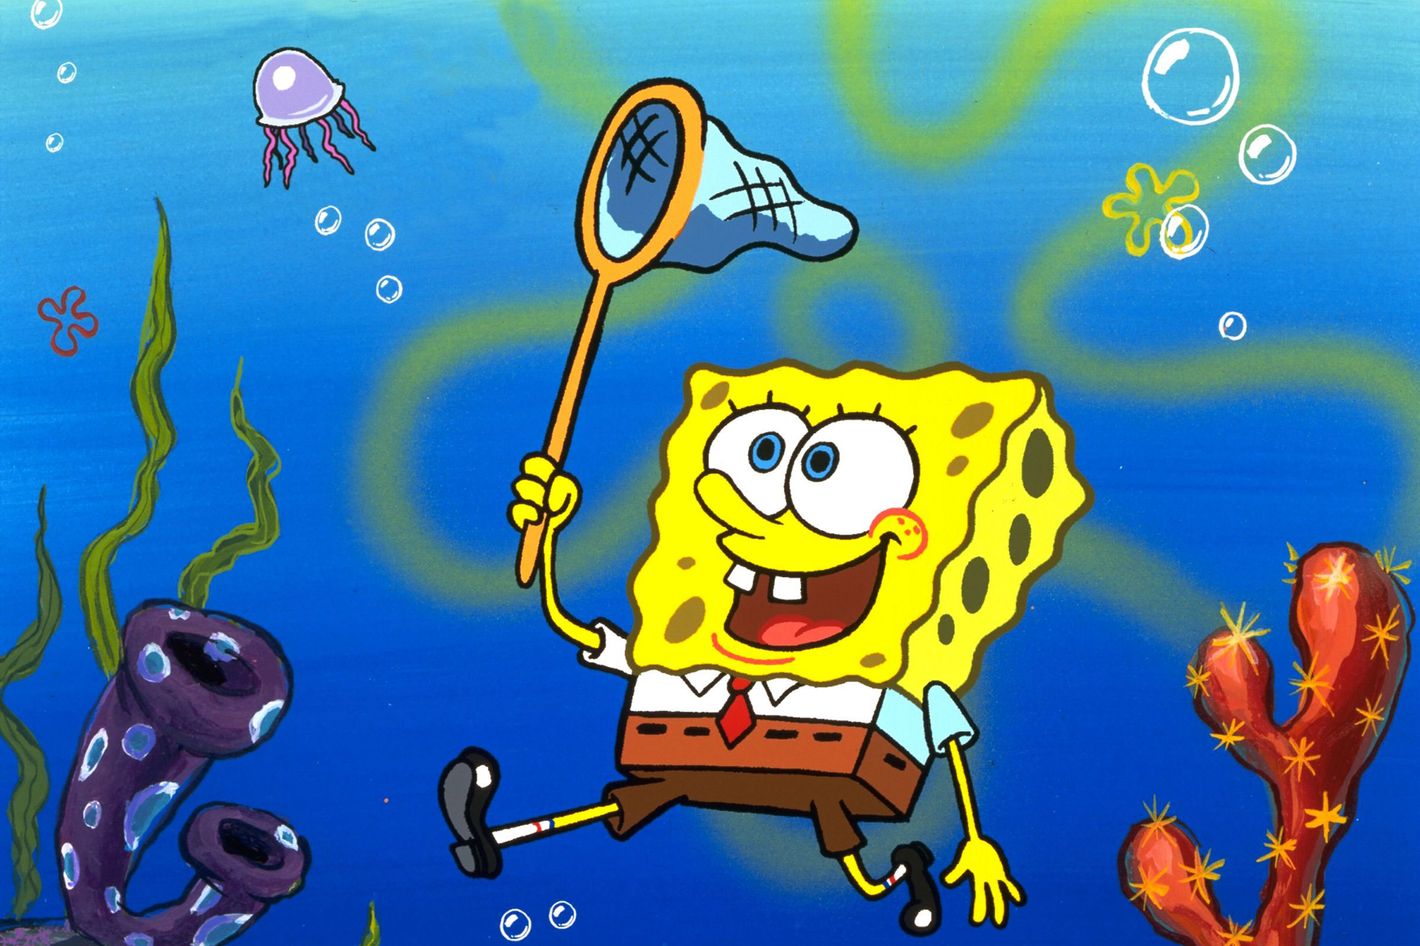 How we made SpongeBob SquarePants, SpongeBob SquarePants